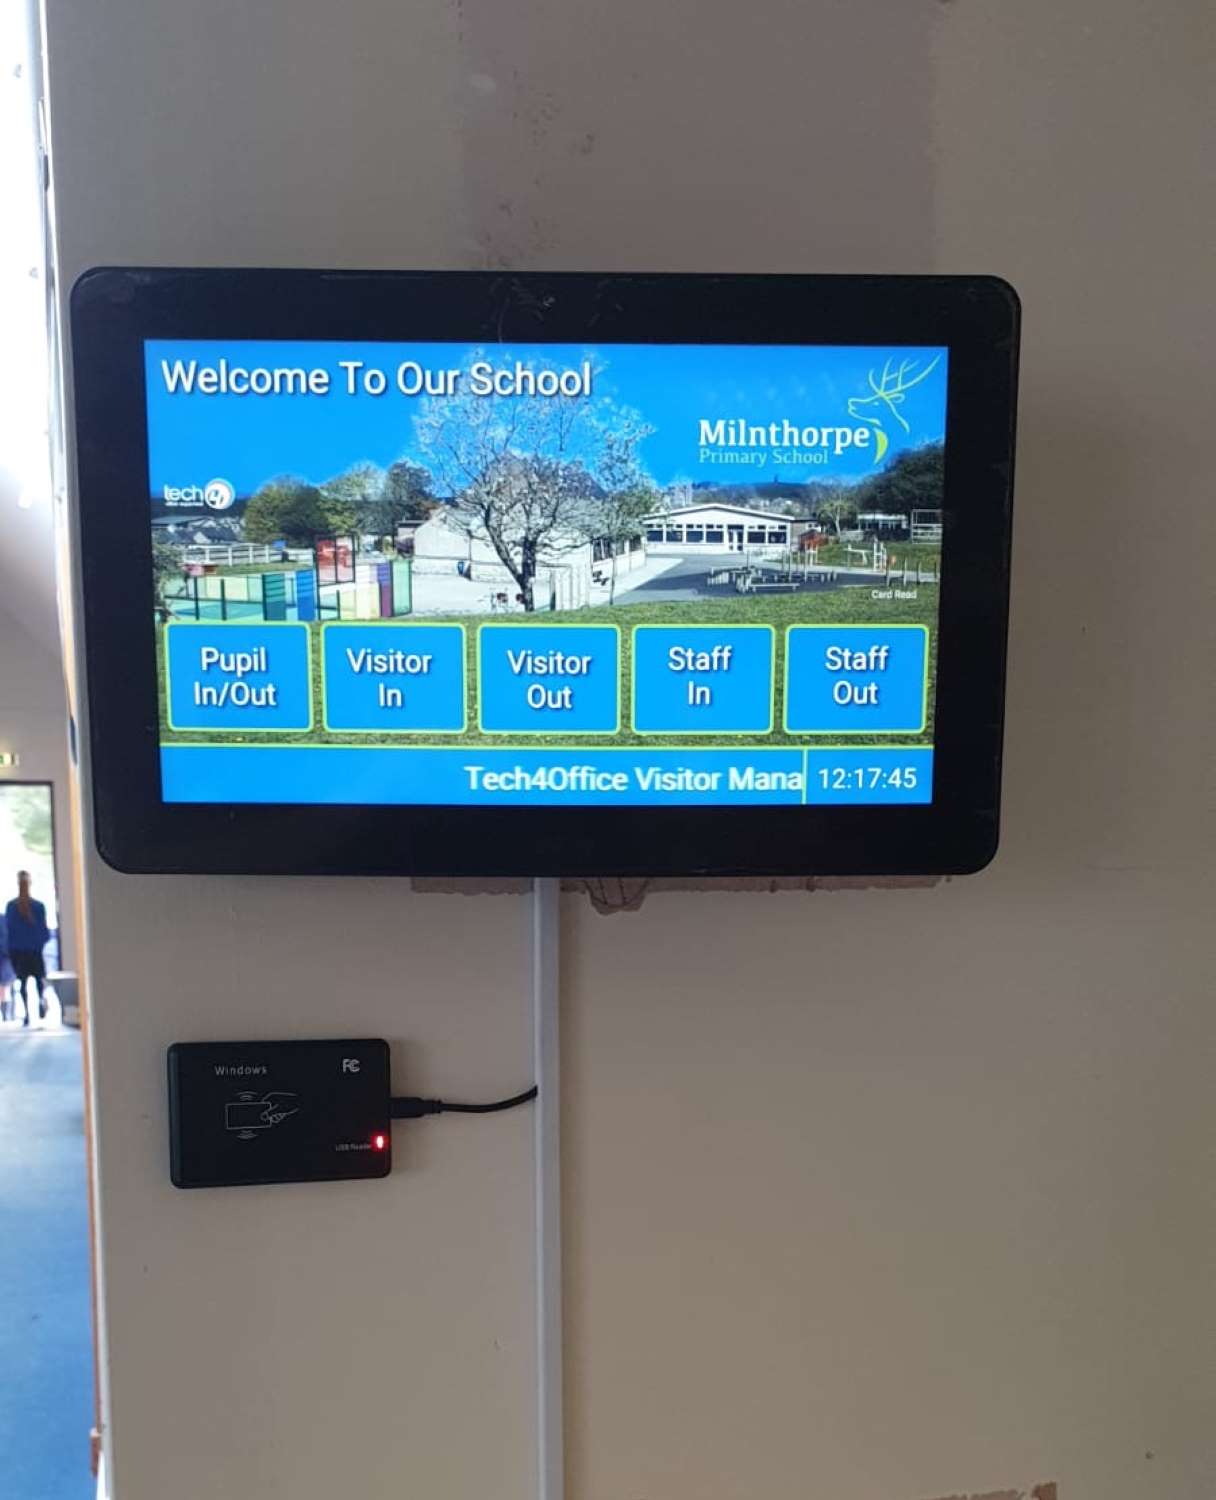 School Visitor Management Systems in Carlisle, Cumbria